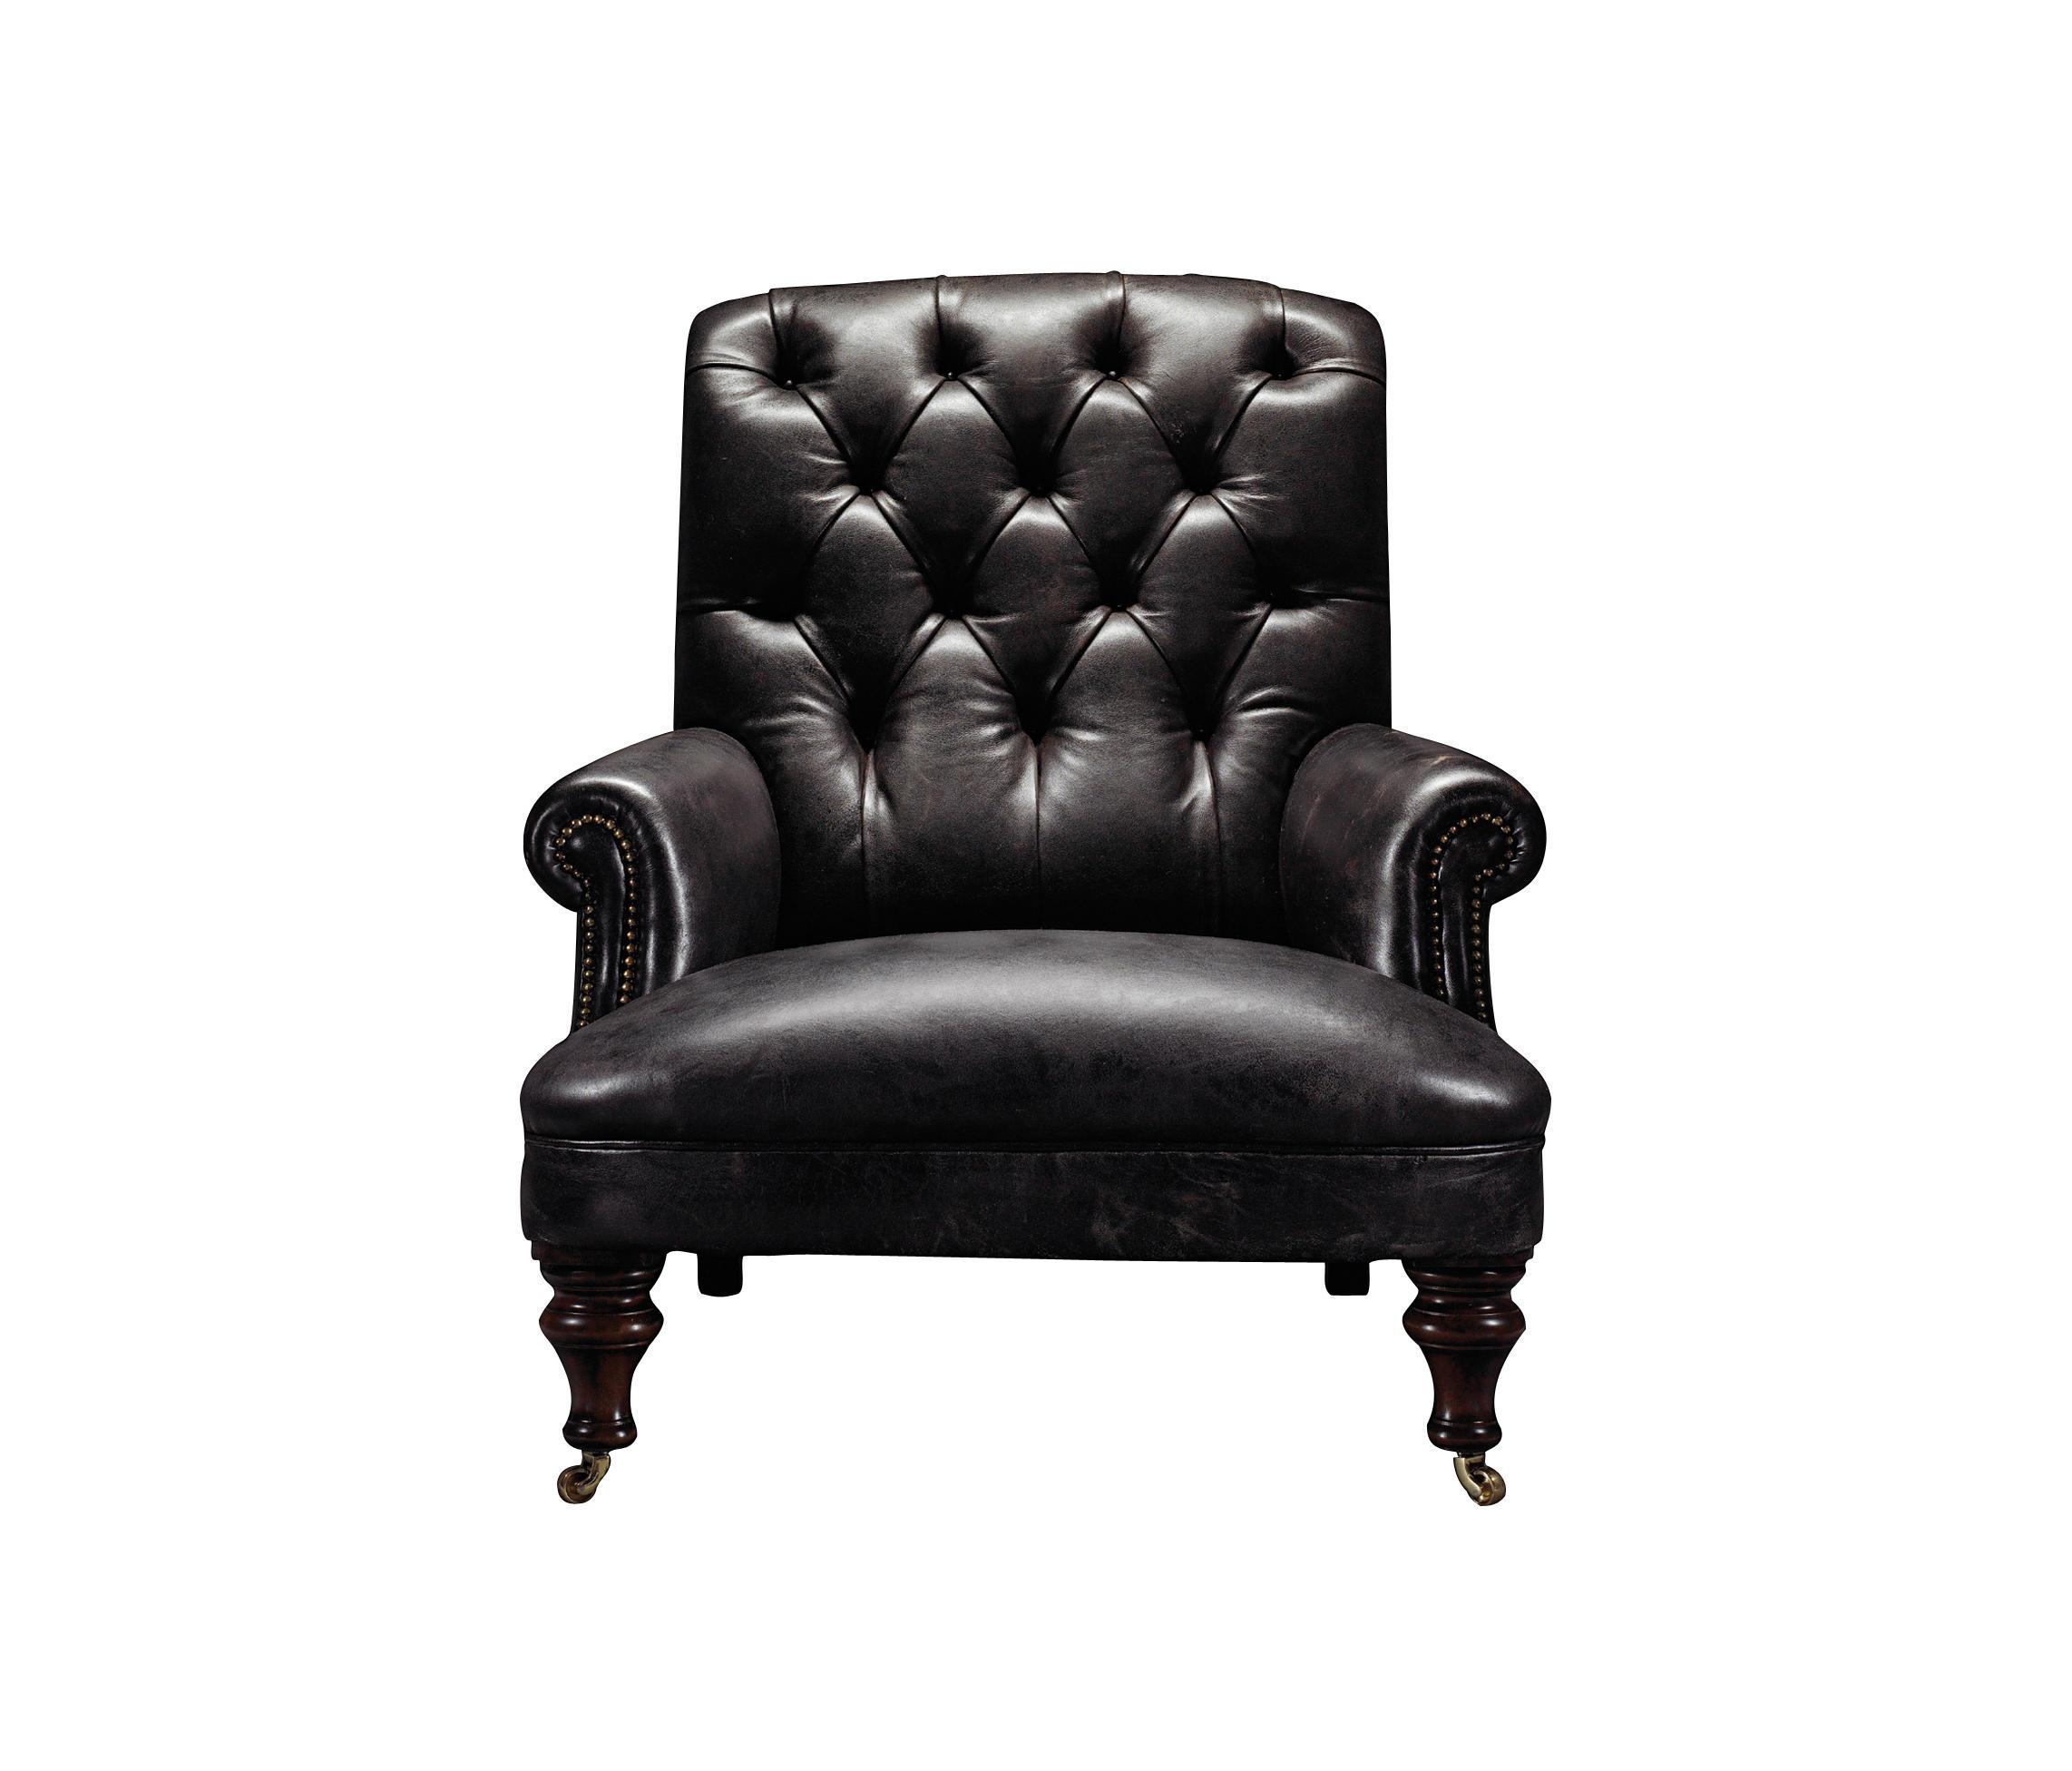 Стул футаж. Кресло кожаное Furniture 9589 Black. Кресло кожаное Grantham Chair. Кресло Savoy Leather Chair. Кресло Neoclassical Armchair.